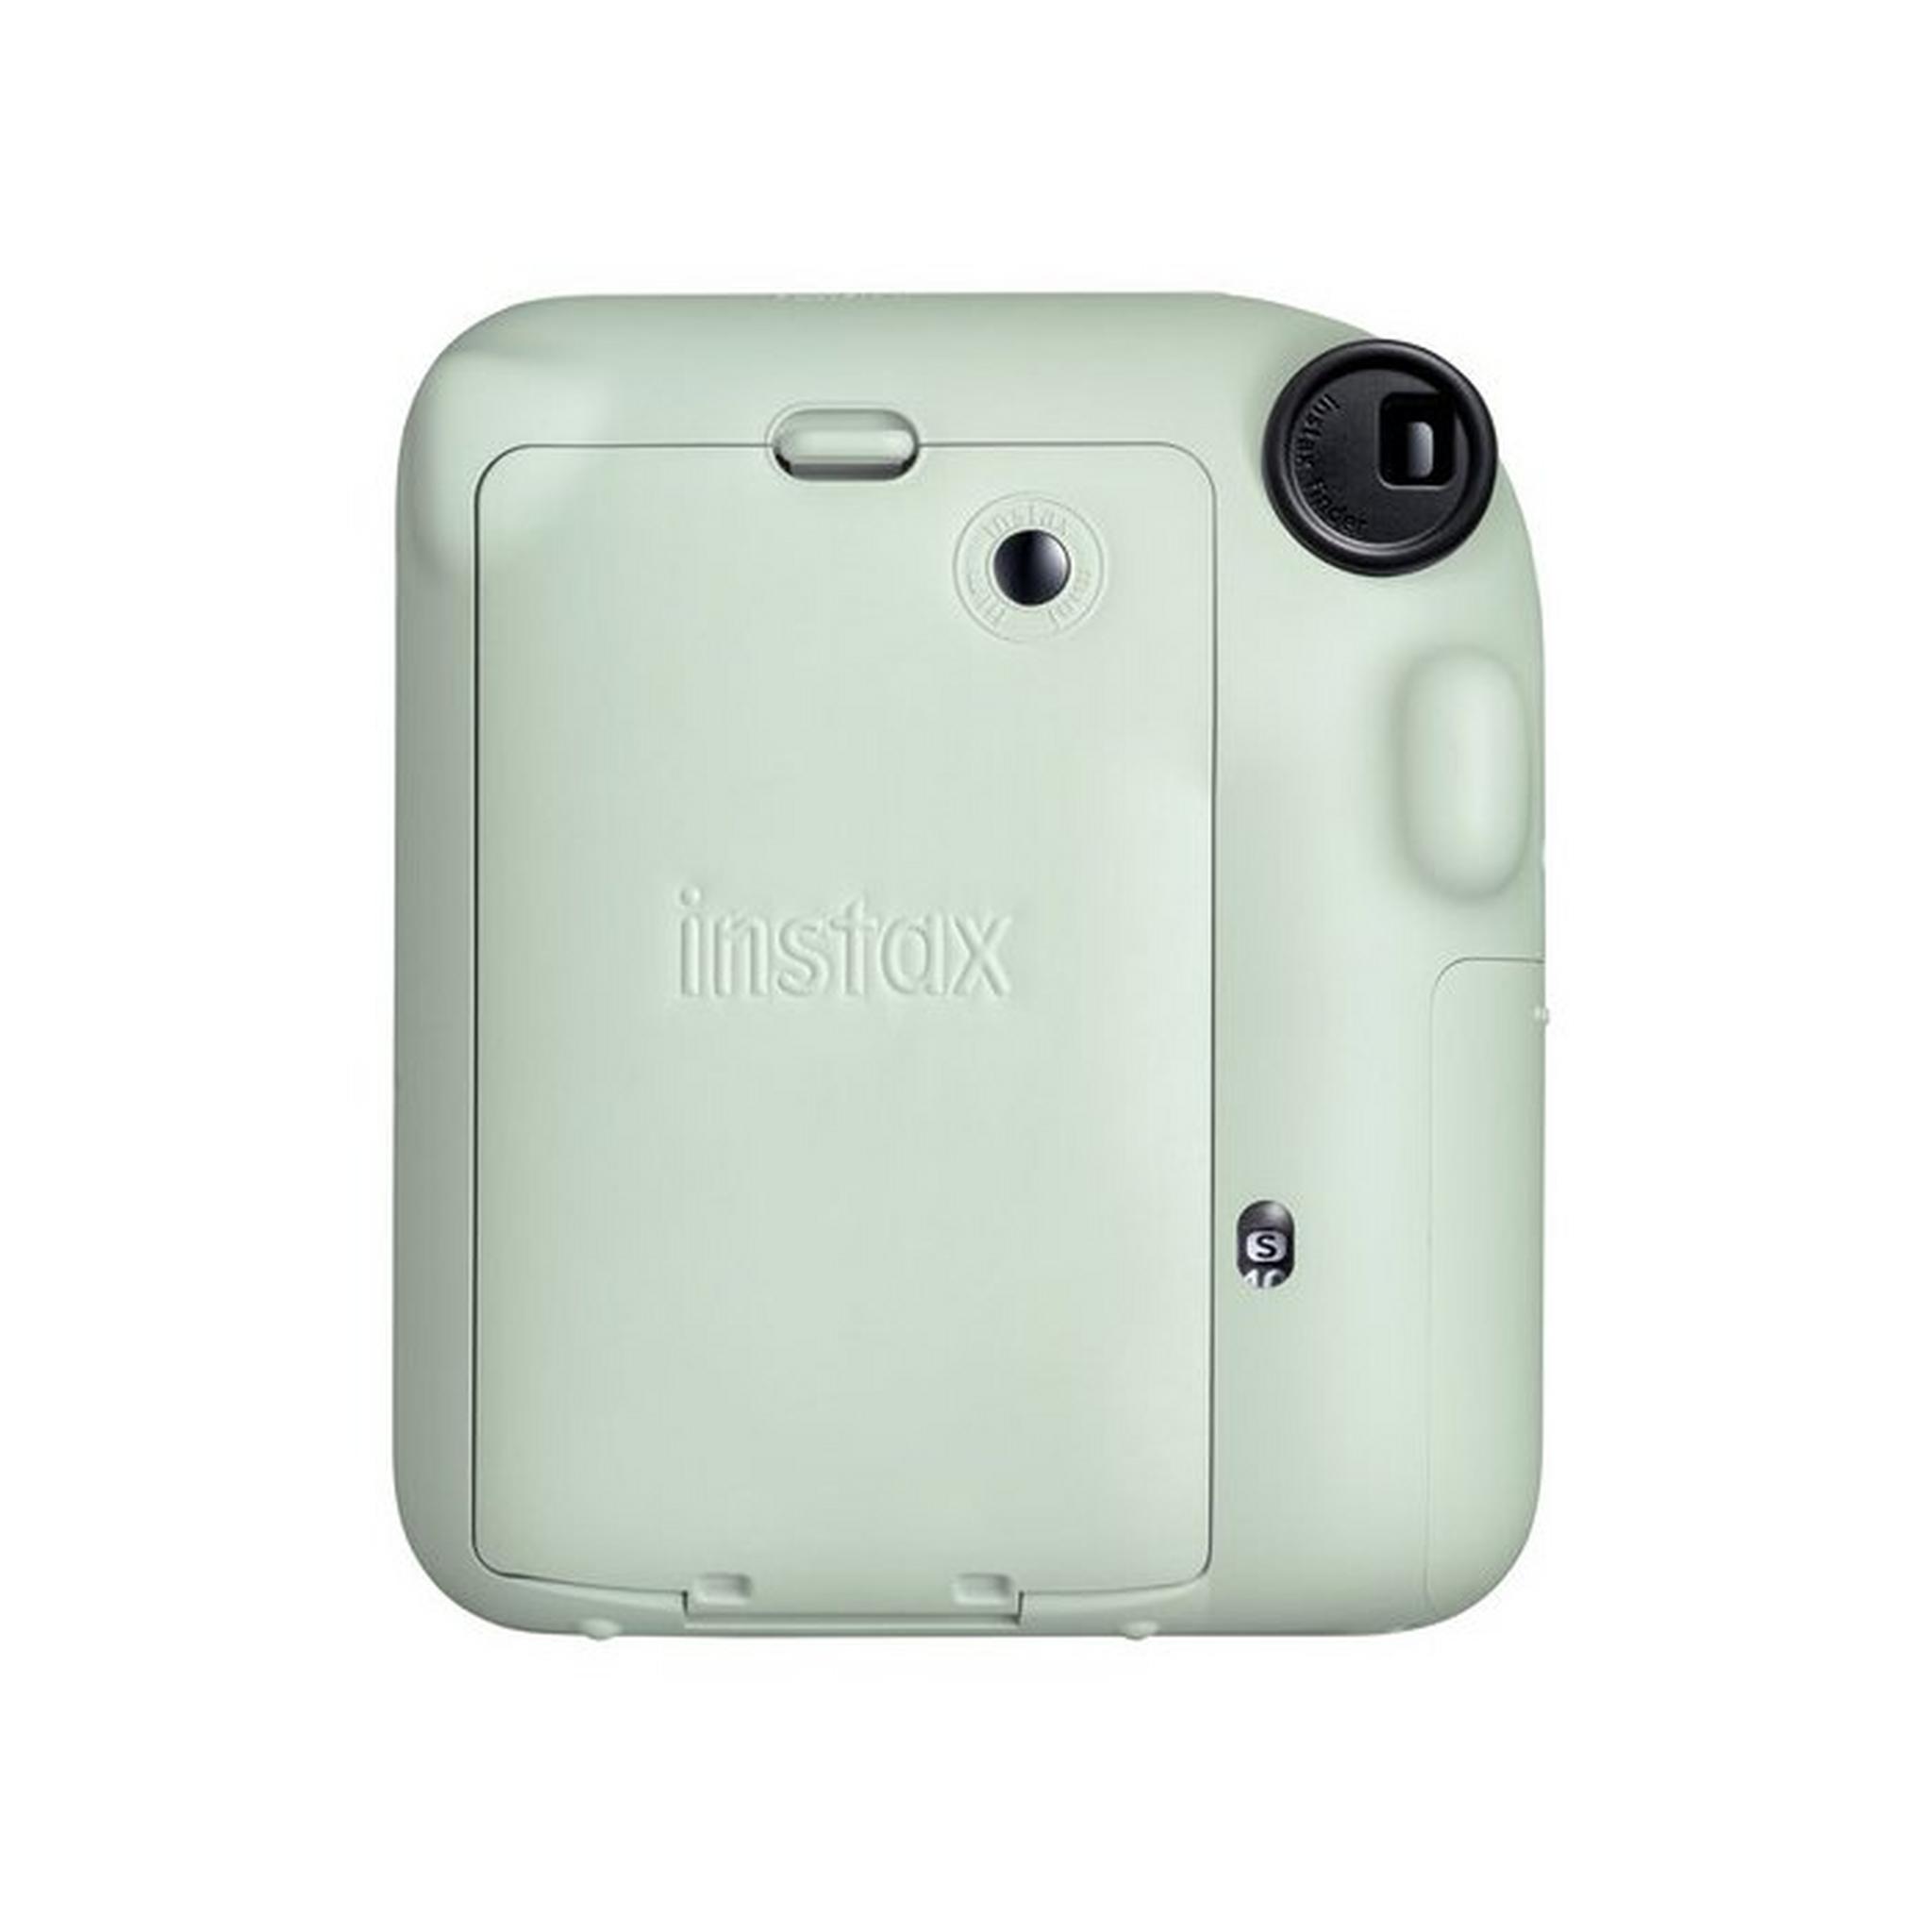 Fujifilm Instax Mini 12 Instant Film Camera Bundle - Green